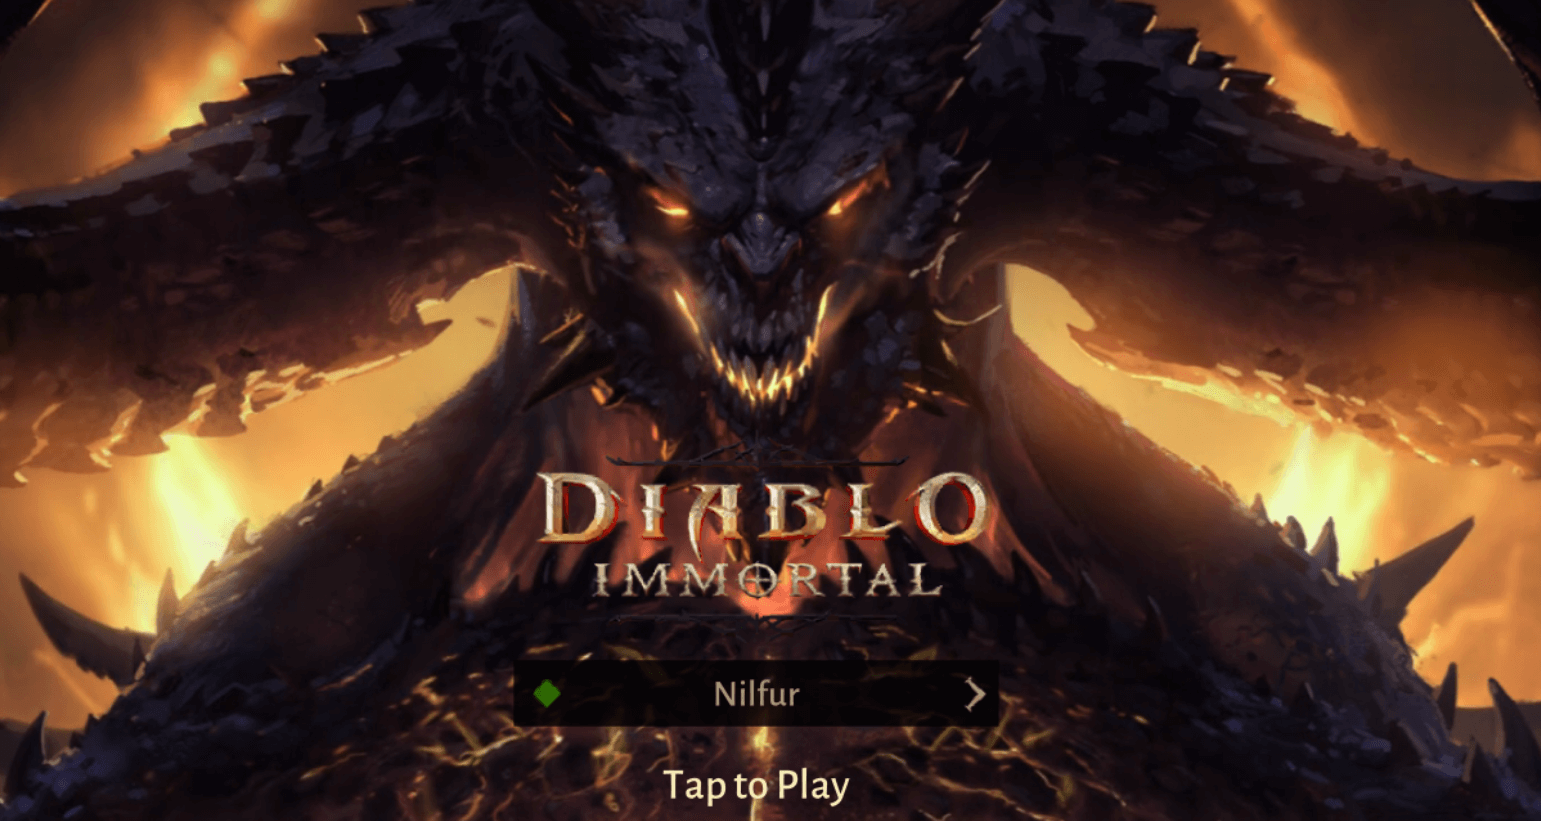 Diablo Immortal's main menu